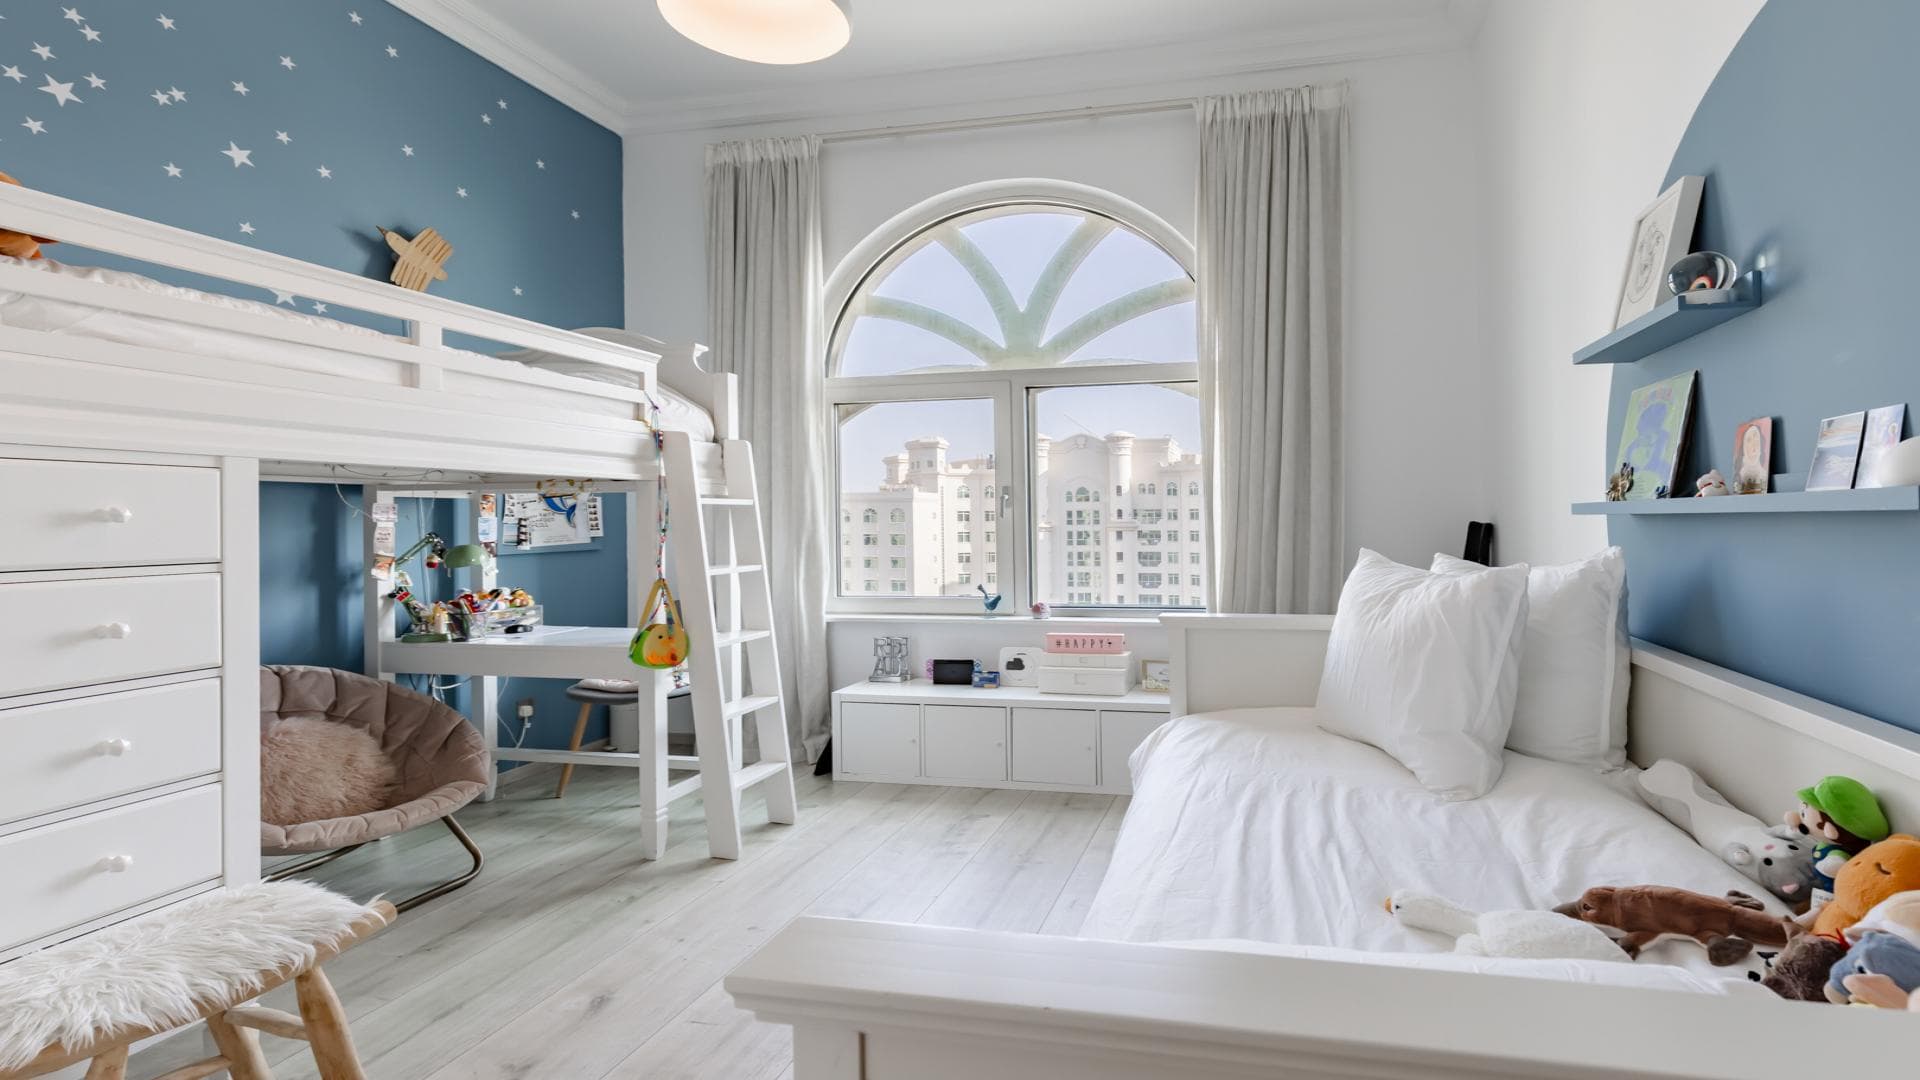 3 Bedroom Apartment For Sale Al Sheraa Tower Lp38279 10a760911a670900.jpg